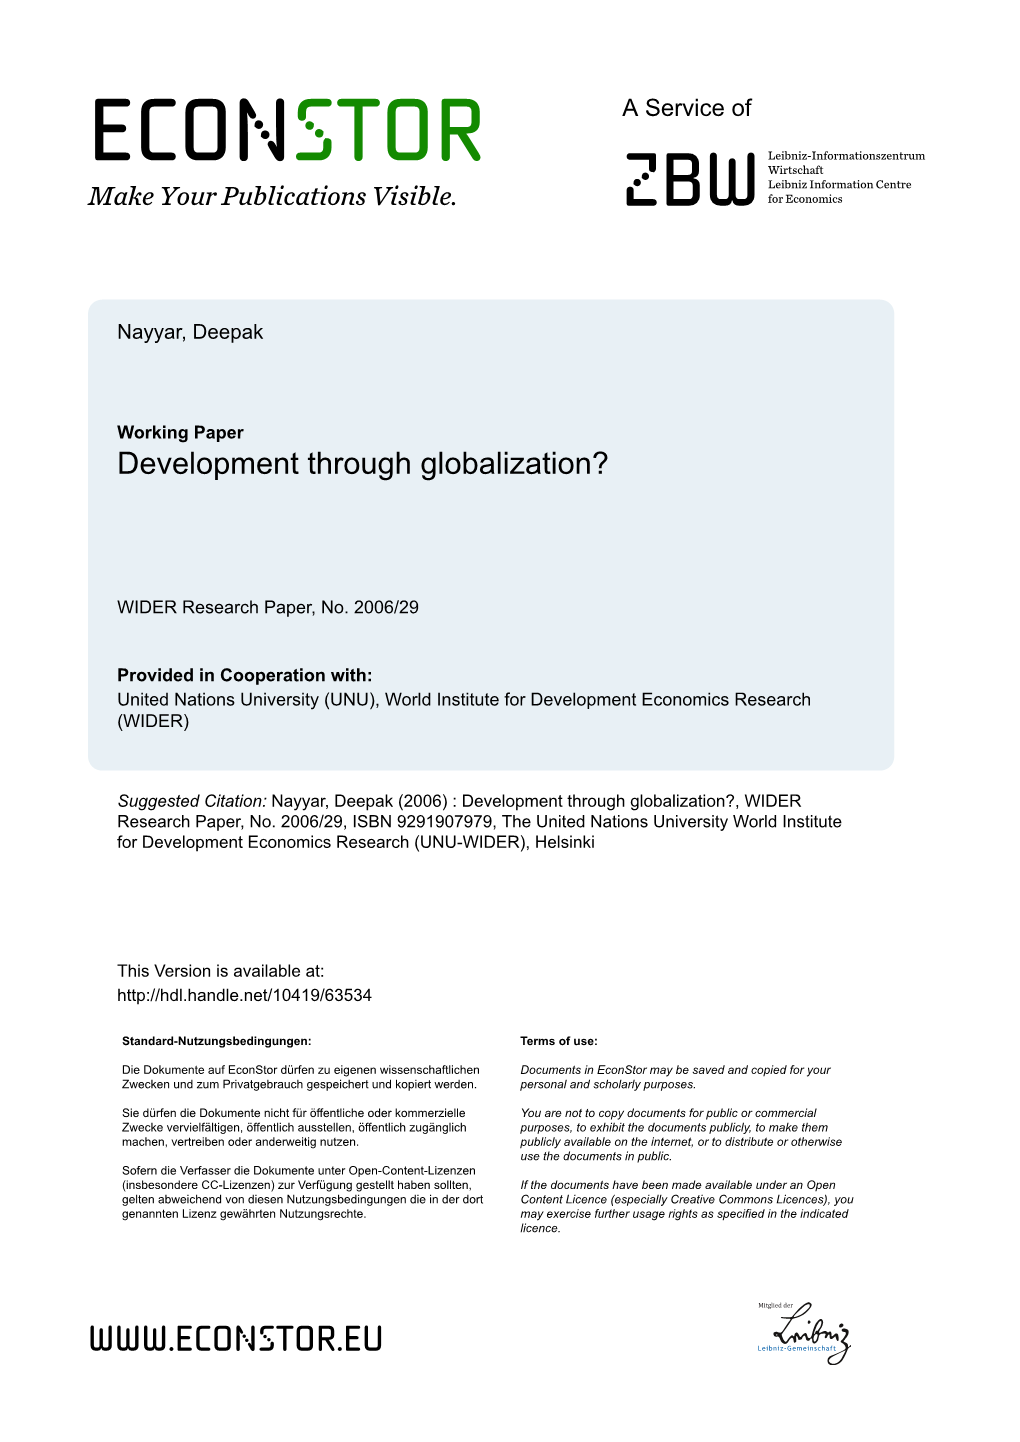 WIDER Research Paper 2006-29 Development Through Globalization?